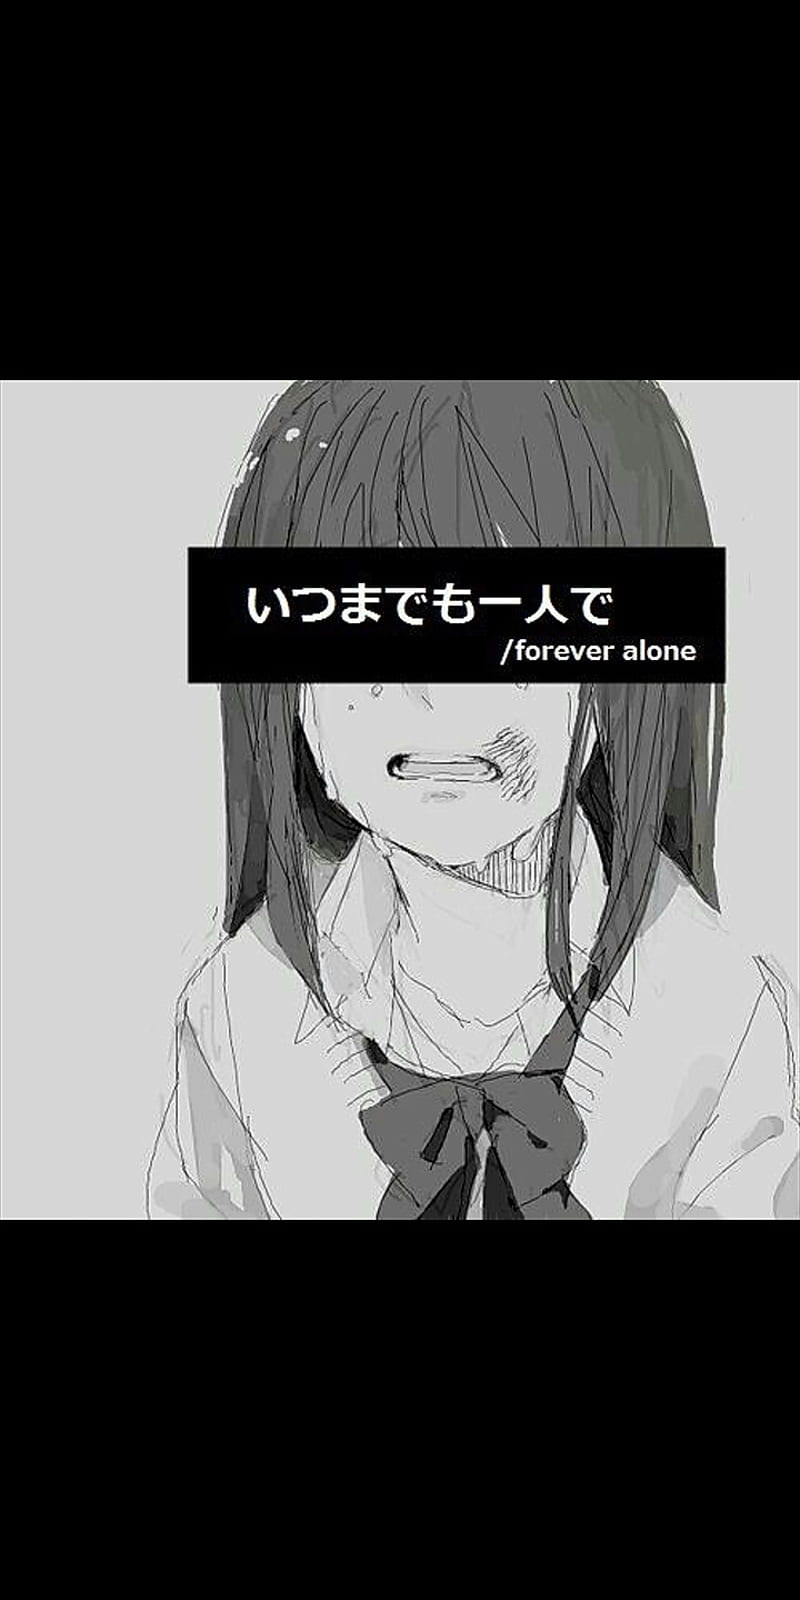 I stopped feeling #dwphantom #anime #fyp #viral #quote #lonely #sadquo... |  tomodachi game | TikTok